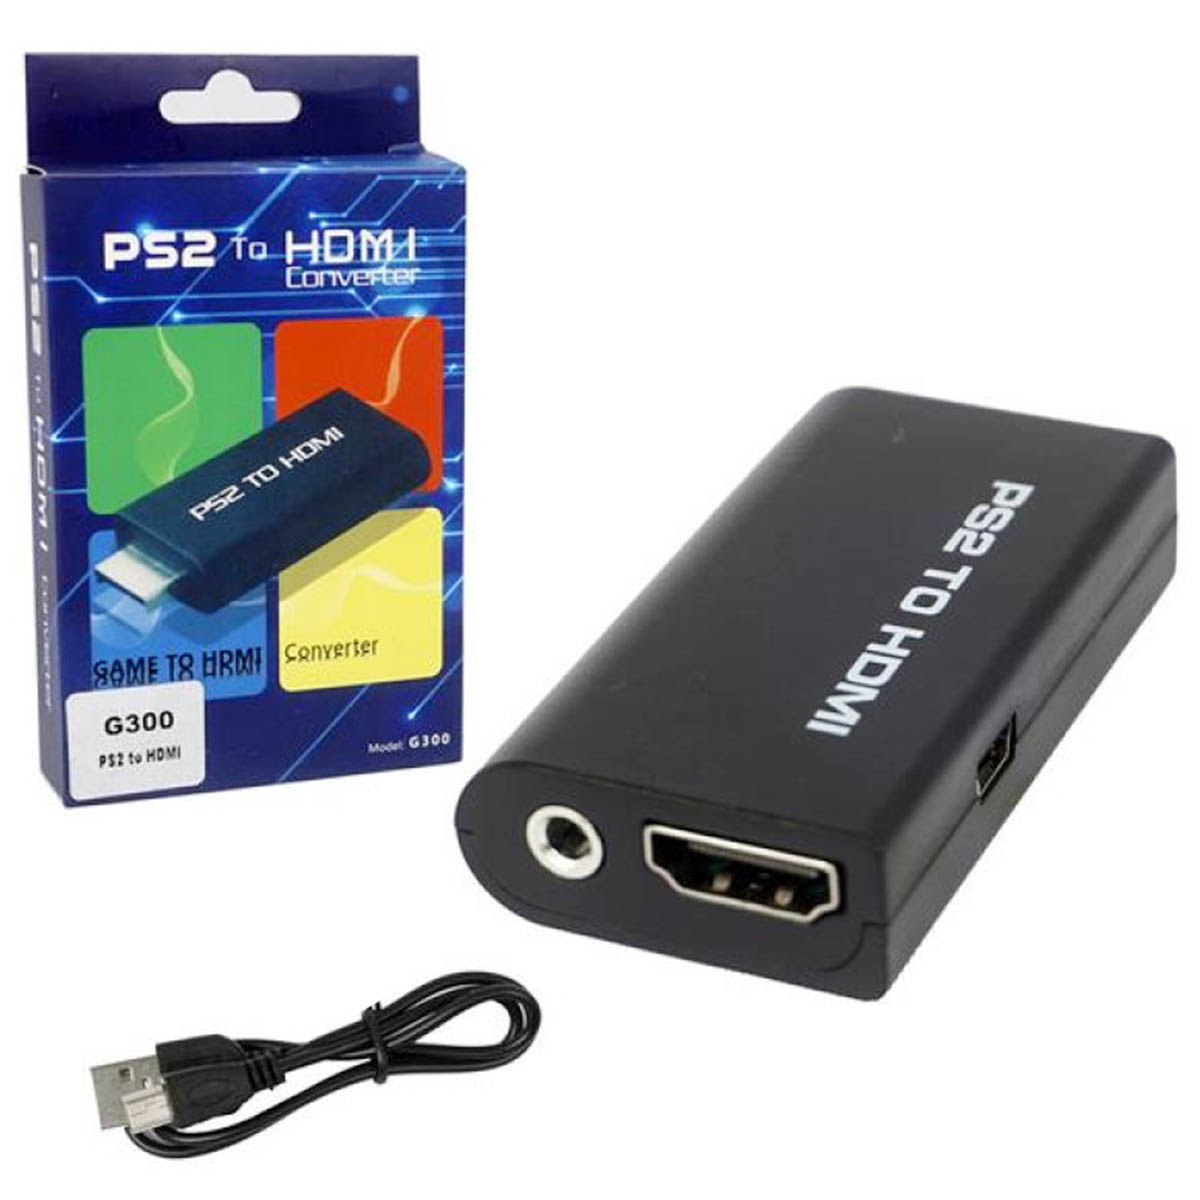 Переходник, адаптер, конвертер G300 PS2 на HDMI, цвет черный